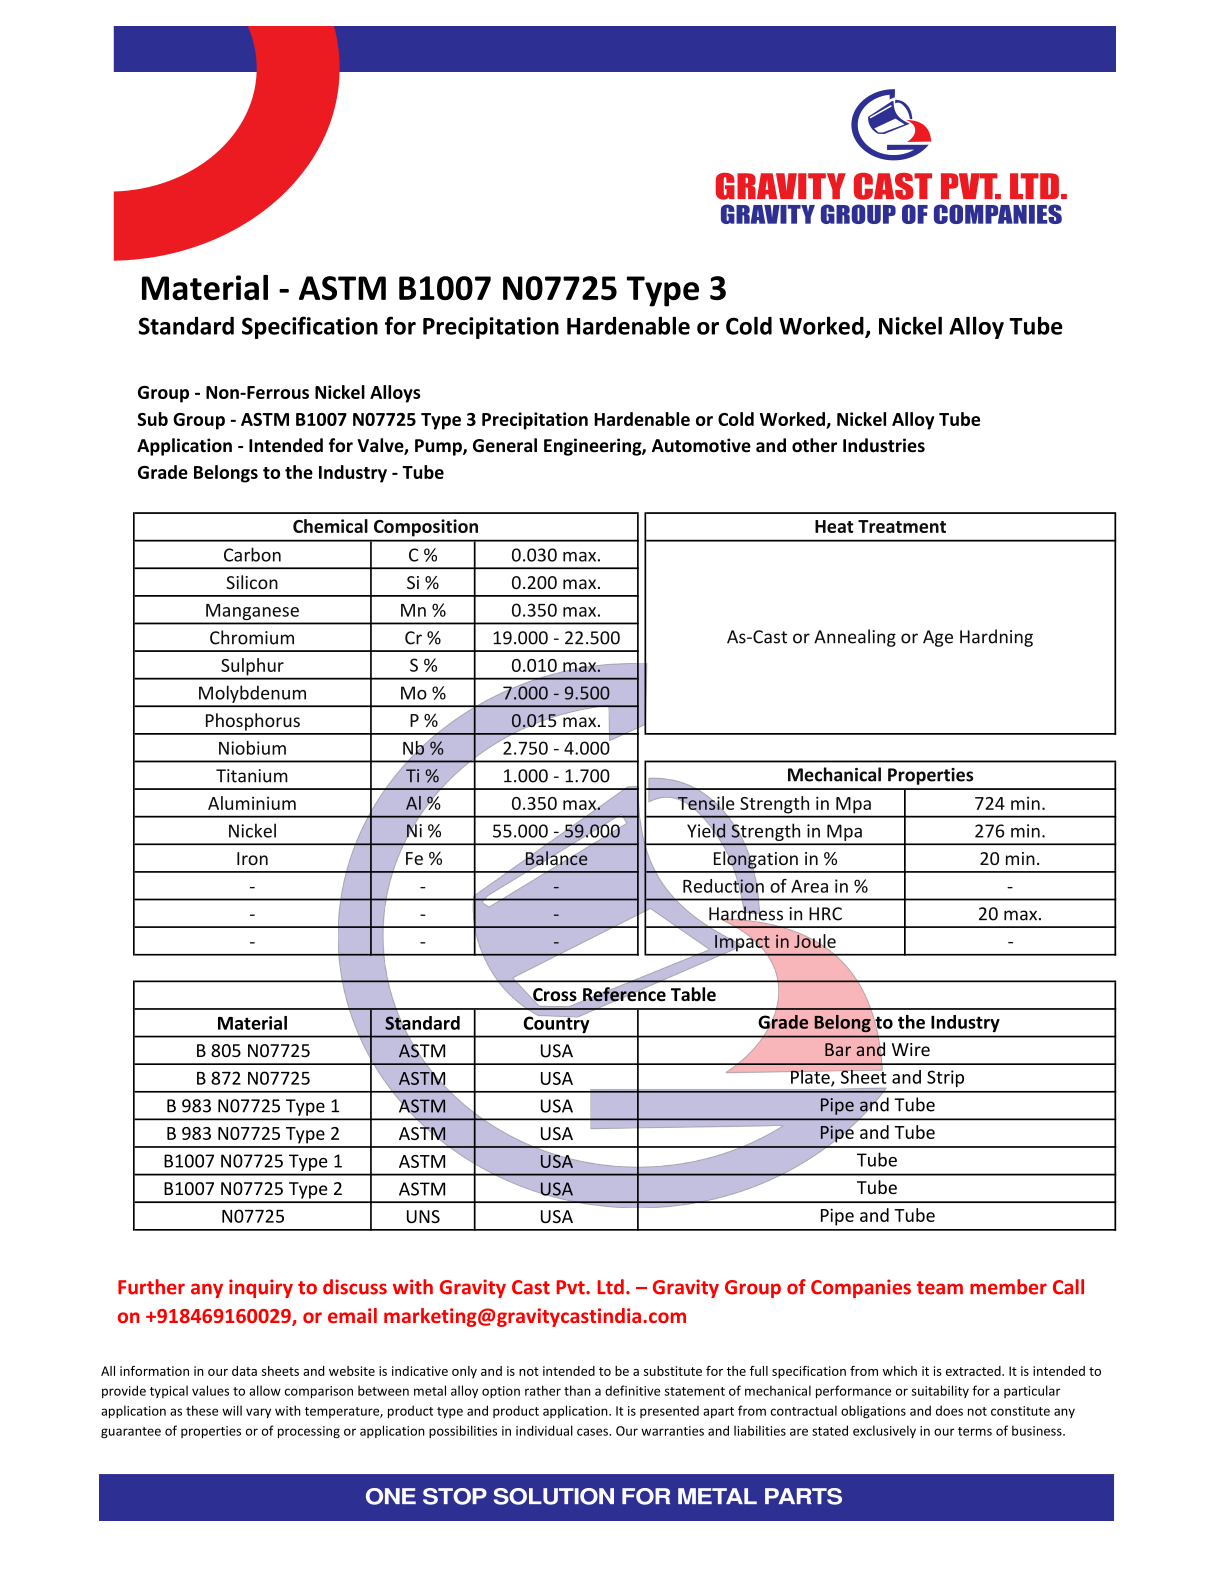 ASTM B1007 N07725 Type 3.pdf